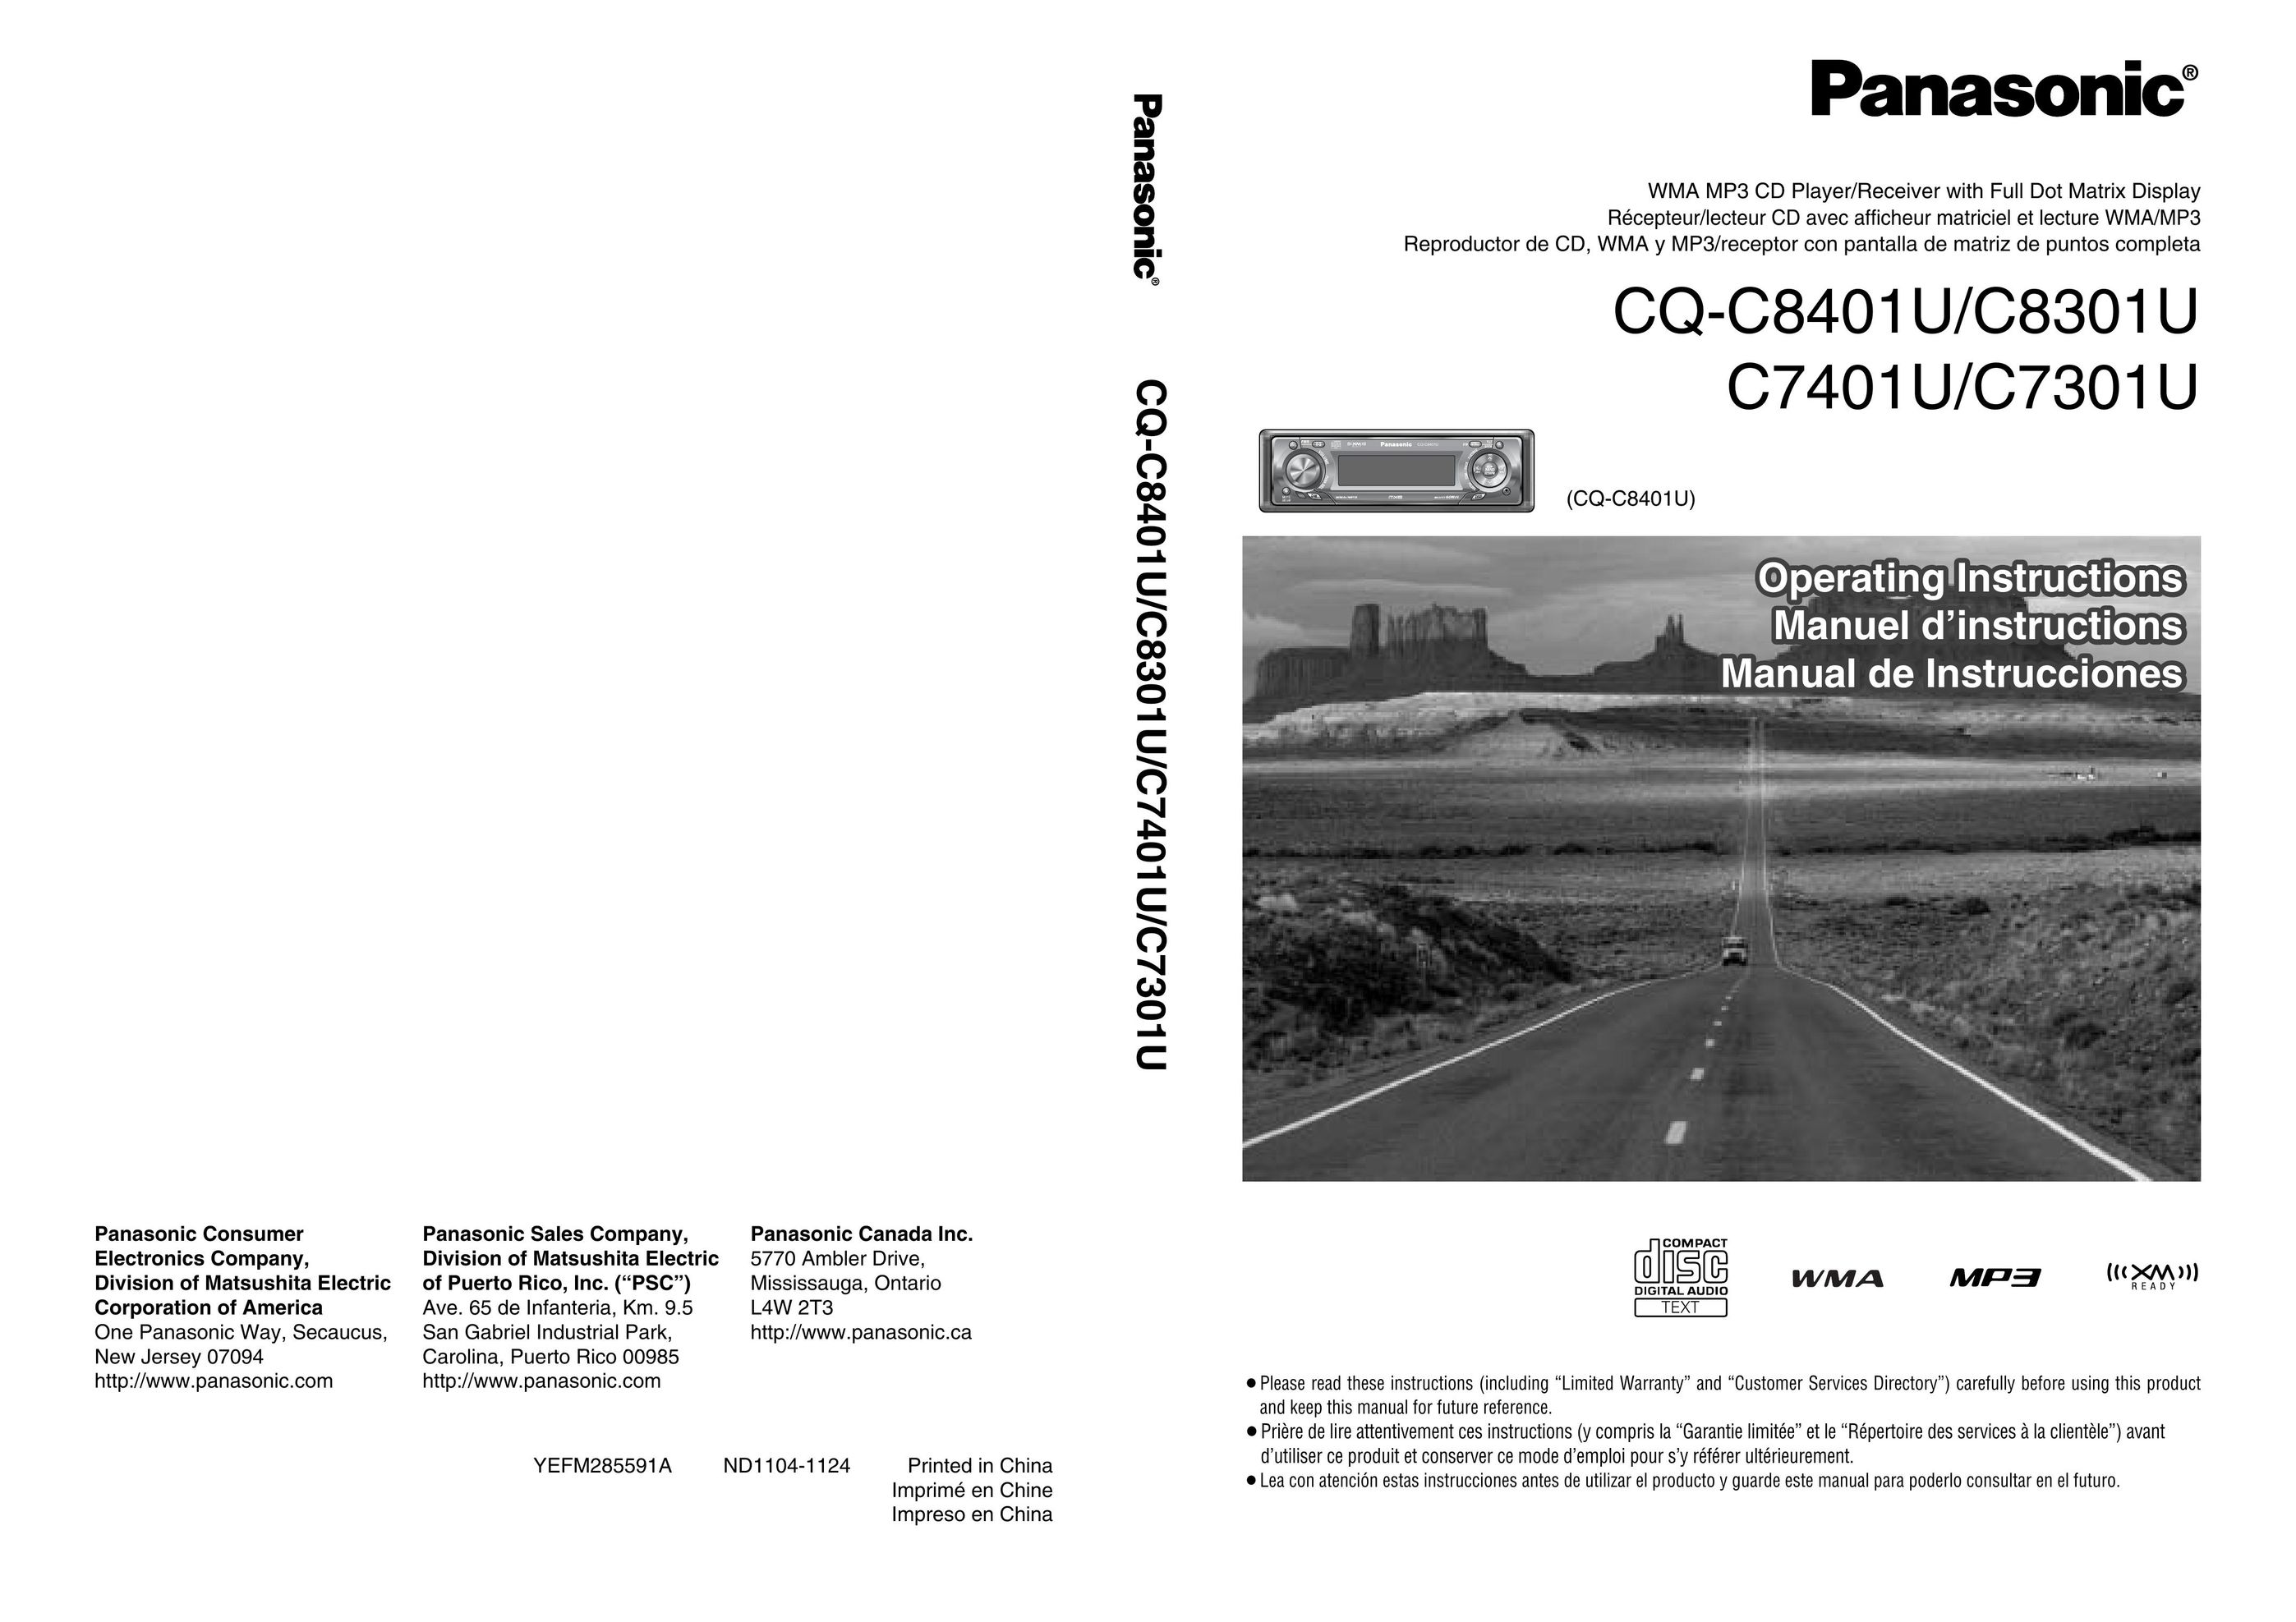 Panasonic C7301U Car Stereo System User Manual